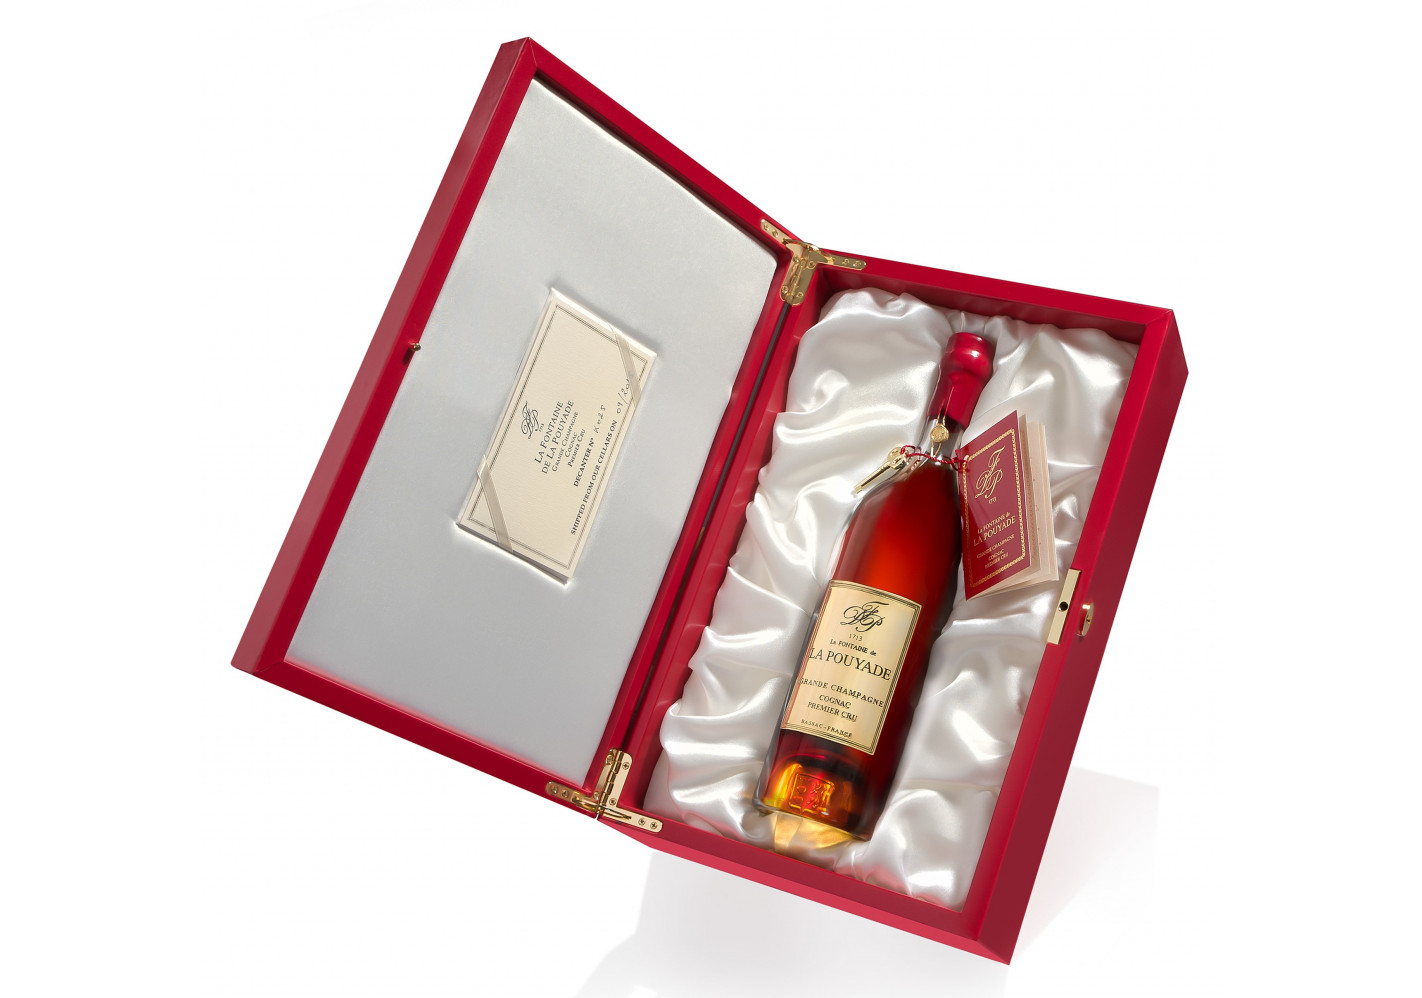 La Fontaine de La Pouyade Cognac - Buy Online on